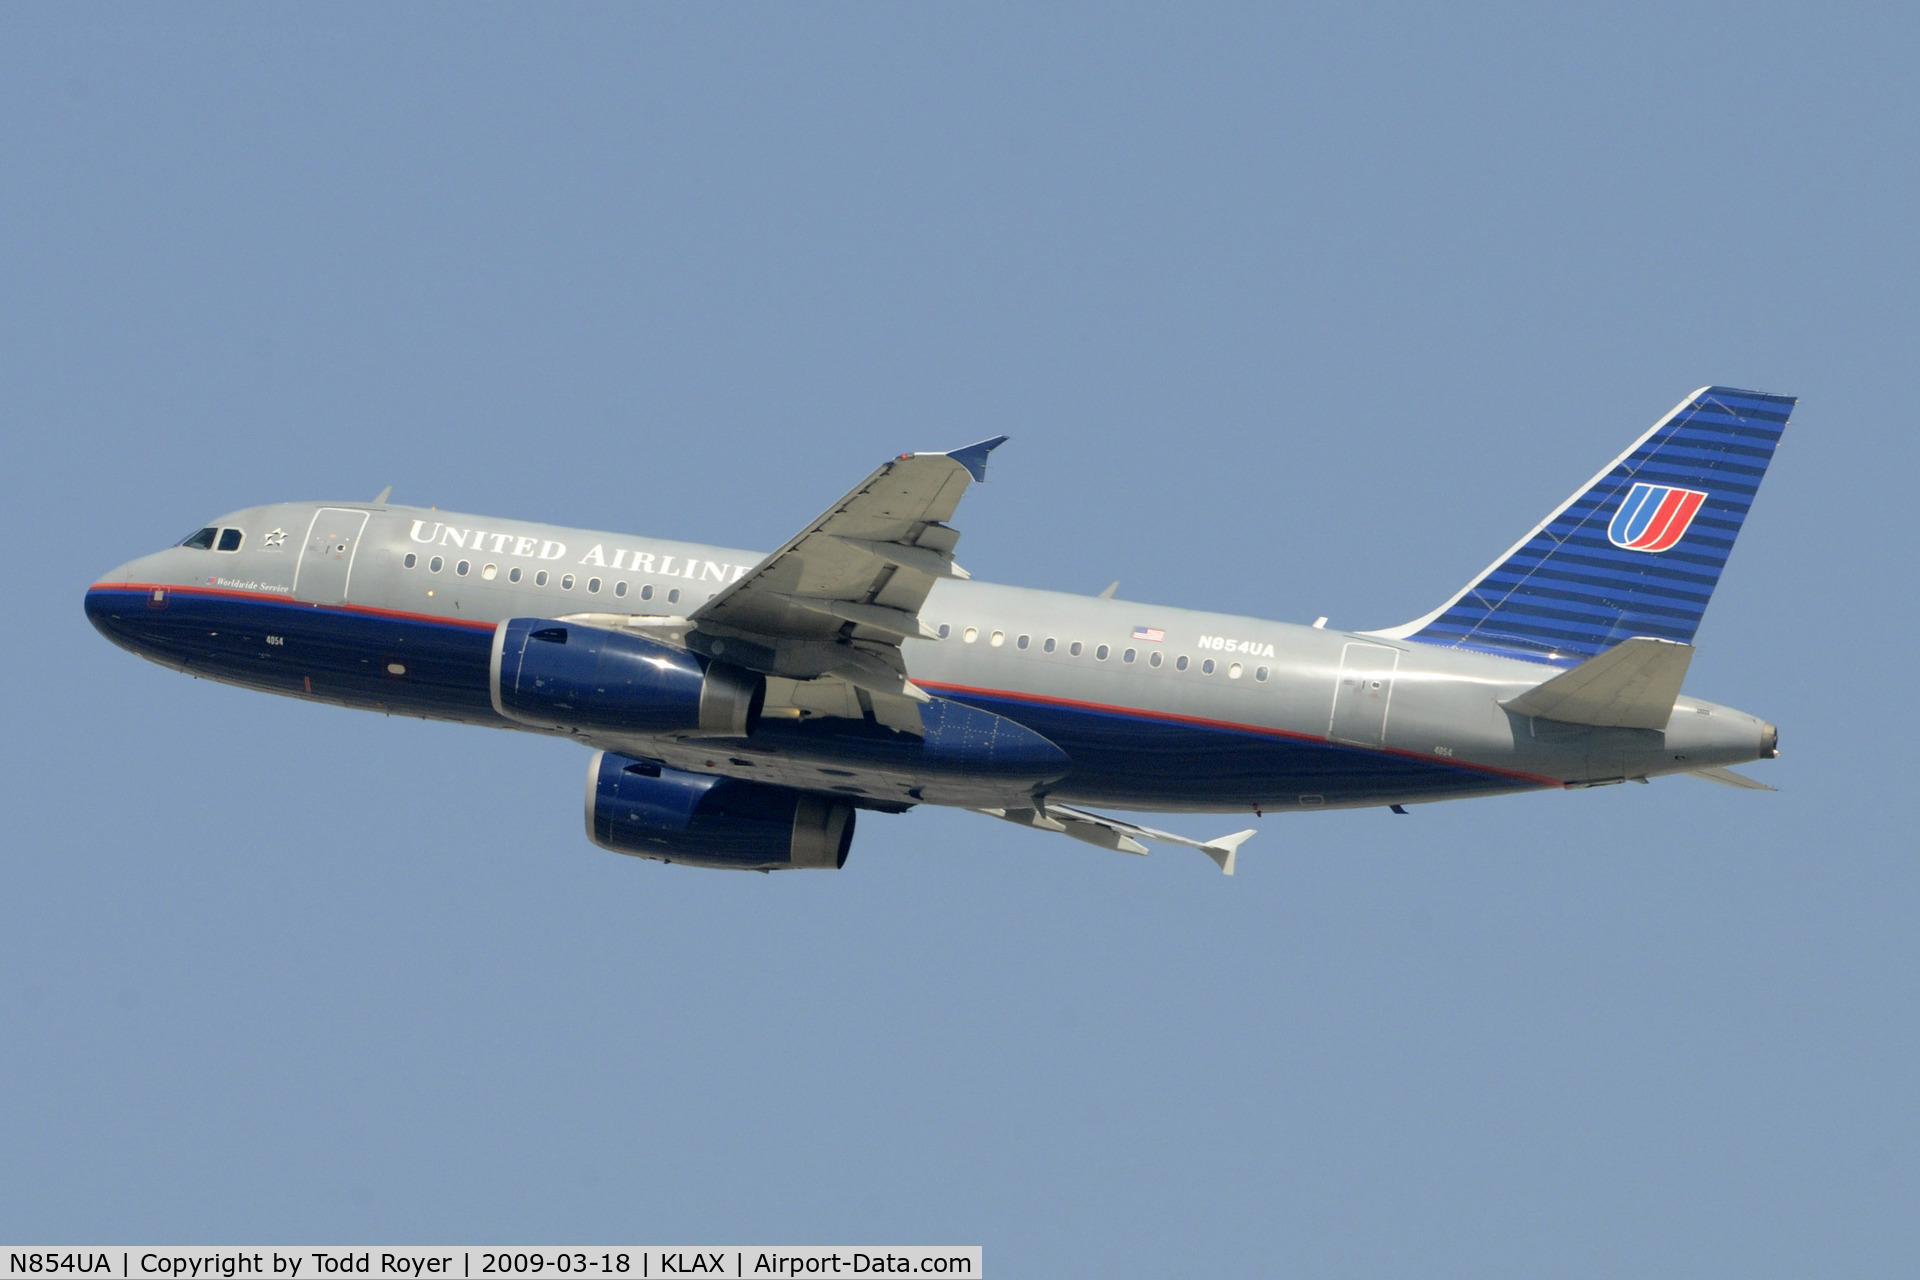 N854UA, 2002 Airbus A319-131 C/N 1731, Departing LAX on 25R